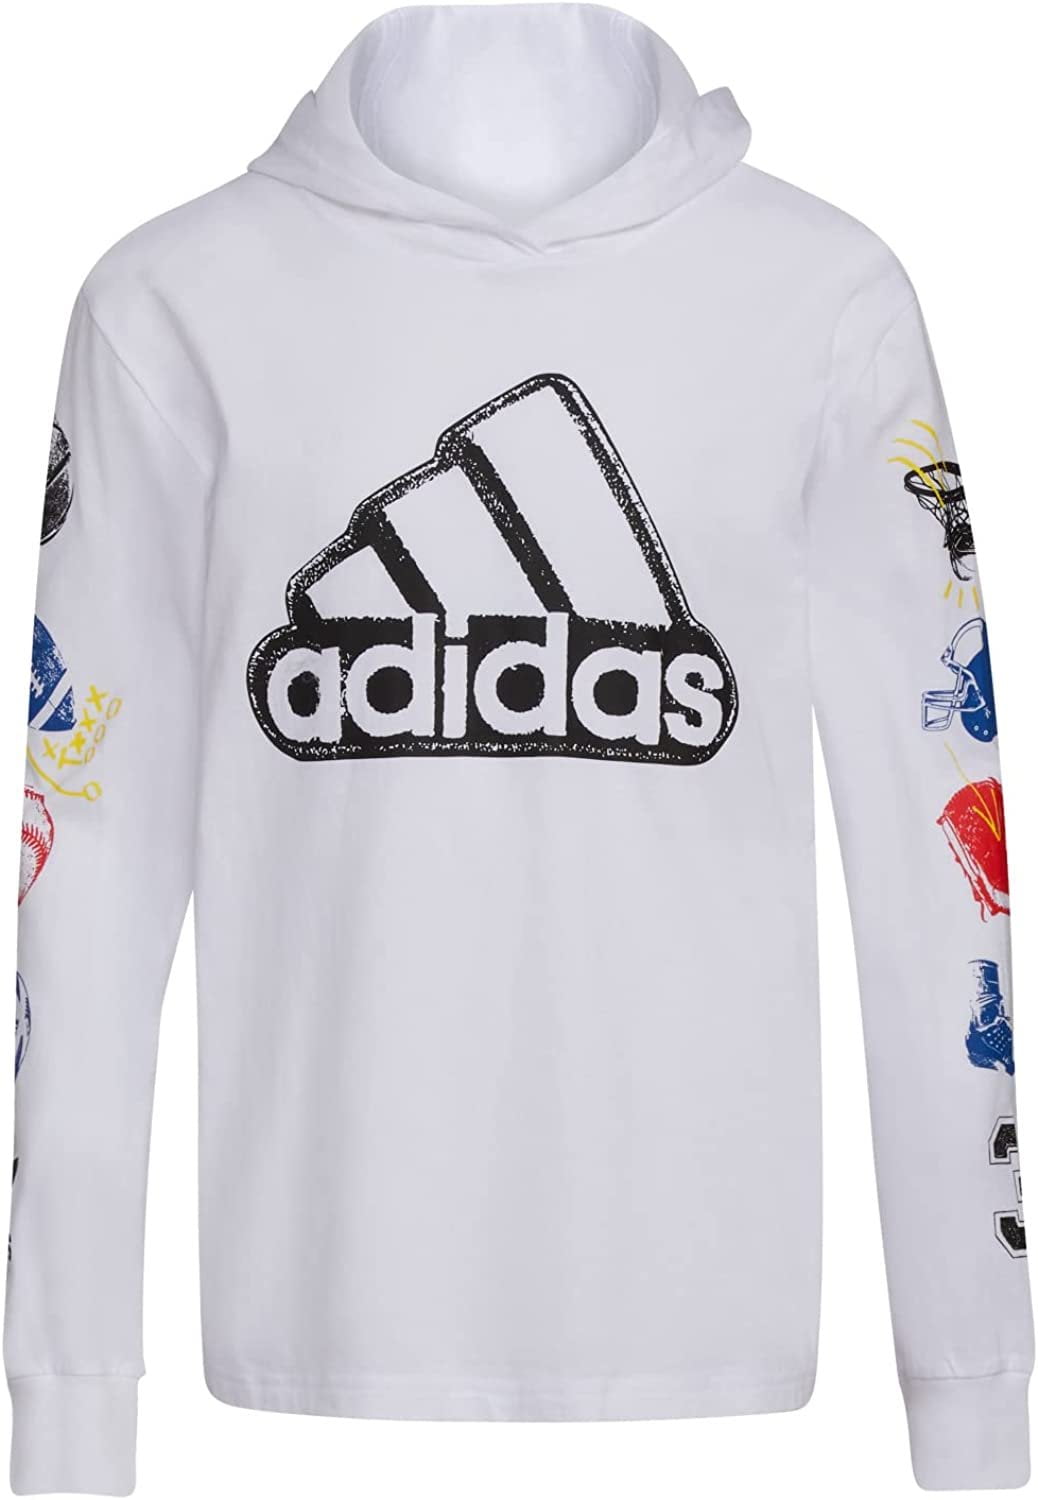 Vurdering generelt radar adidas Boys' Long Sleeve Cotton Jersey Hooded T-Shirt Tee, Sport Stamp on  White, Small - Walmart.com